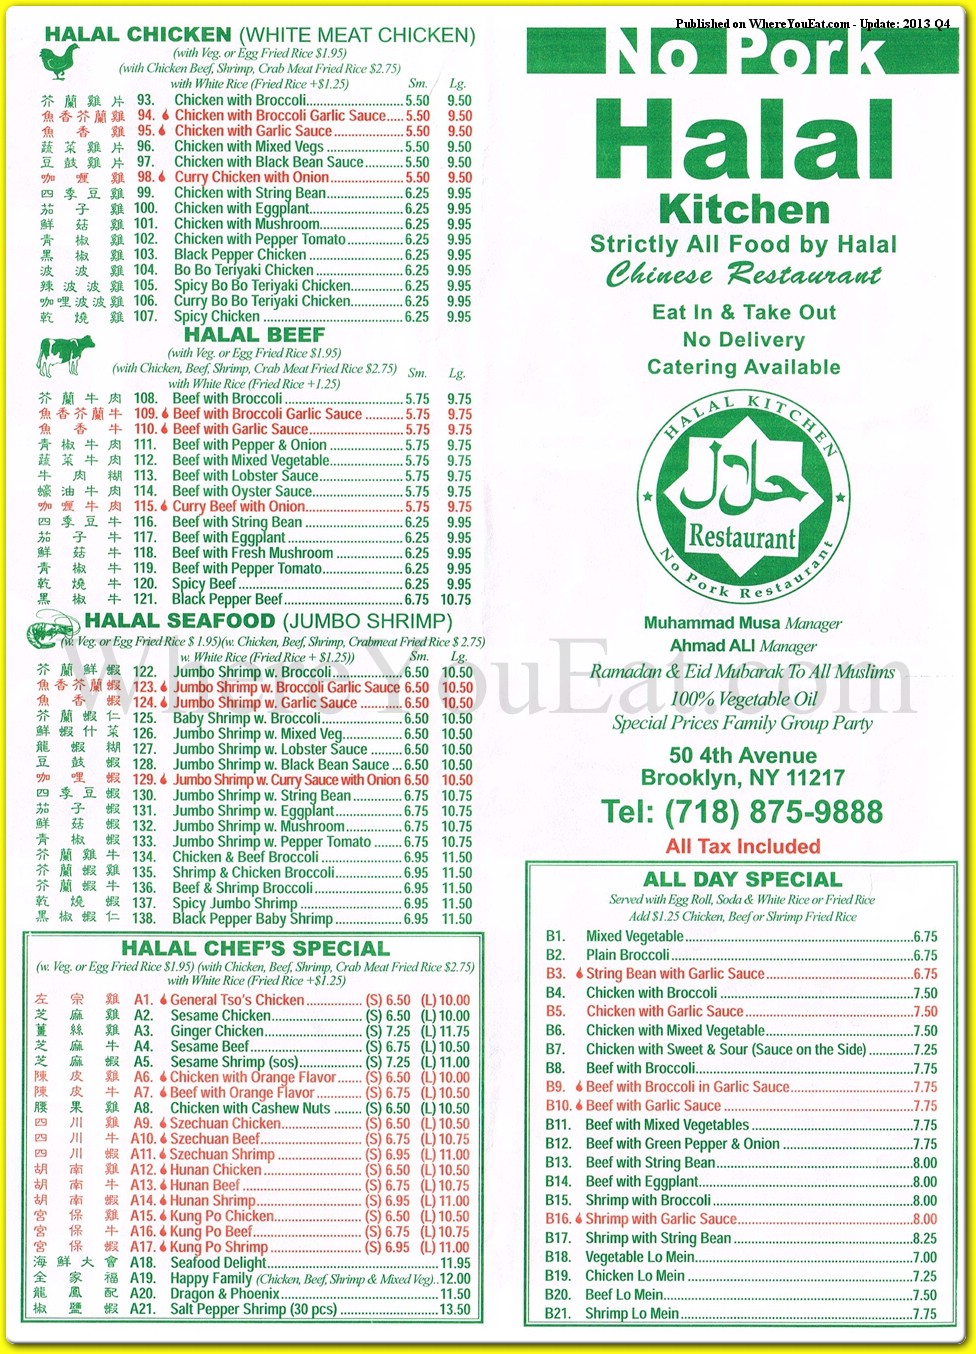 Halal Kitchen Restaurant In Brooklyn Official Menus Photos